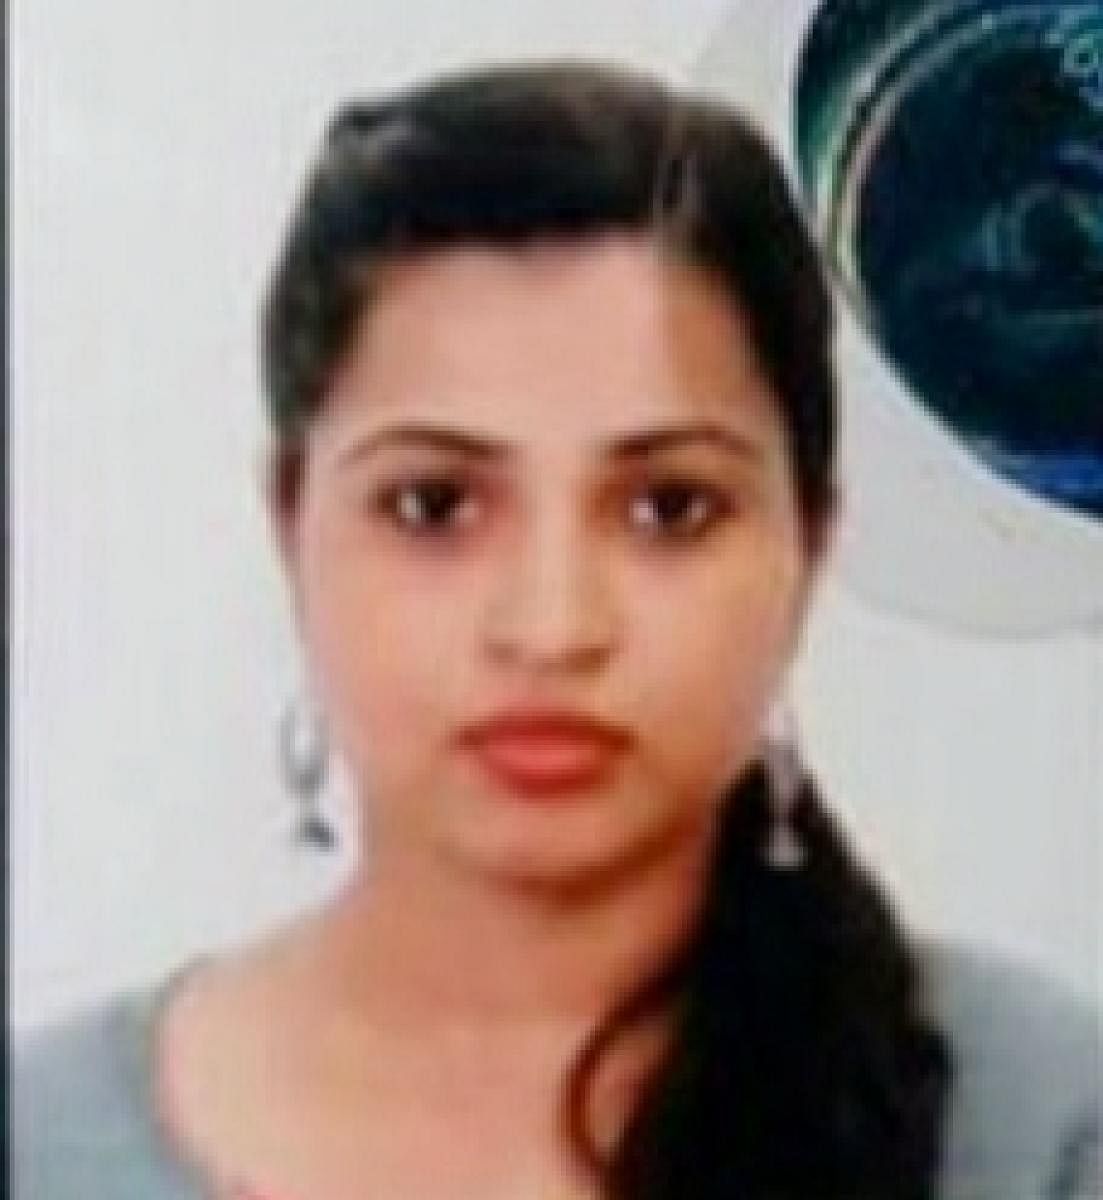 Victim Vijayalakshmi